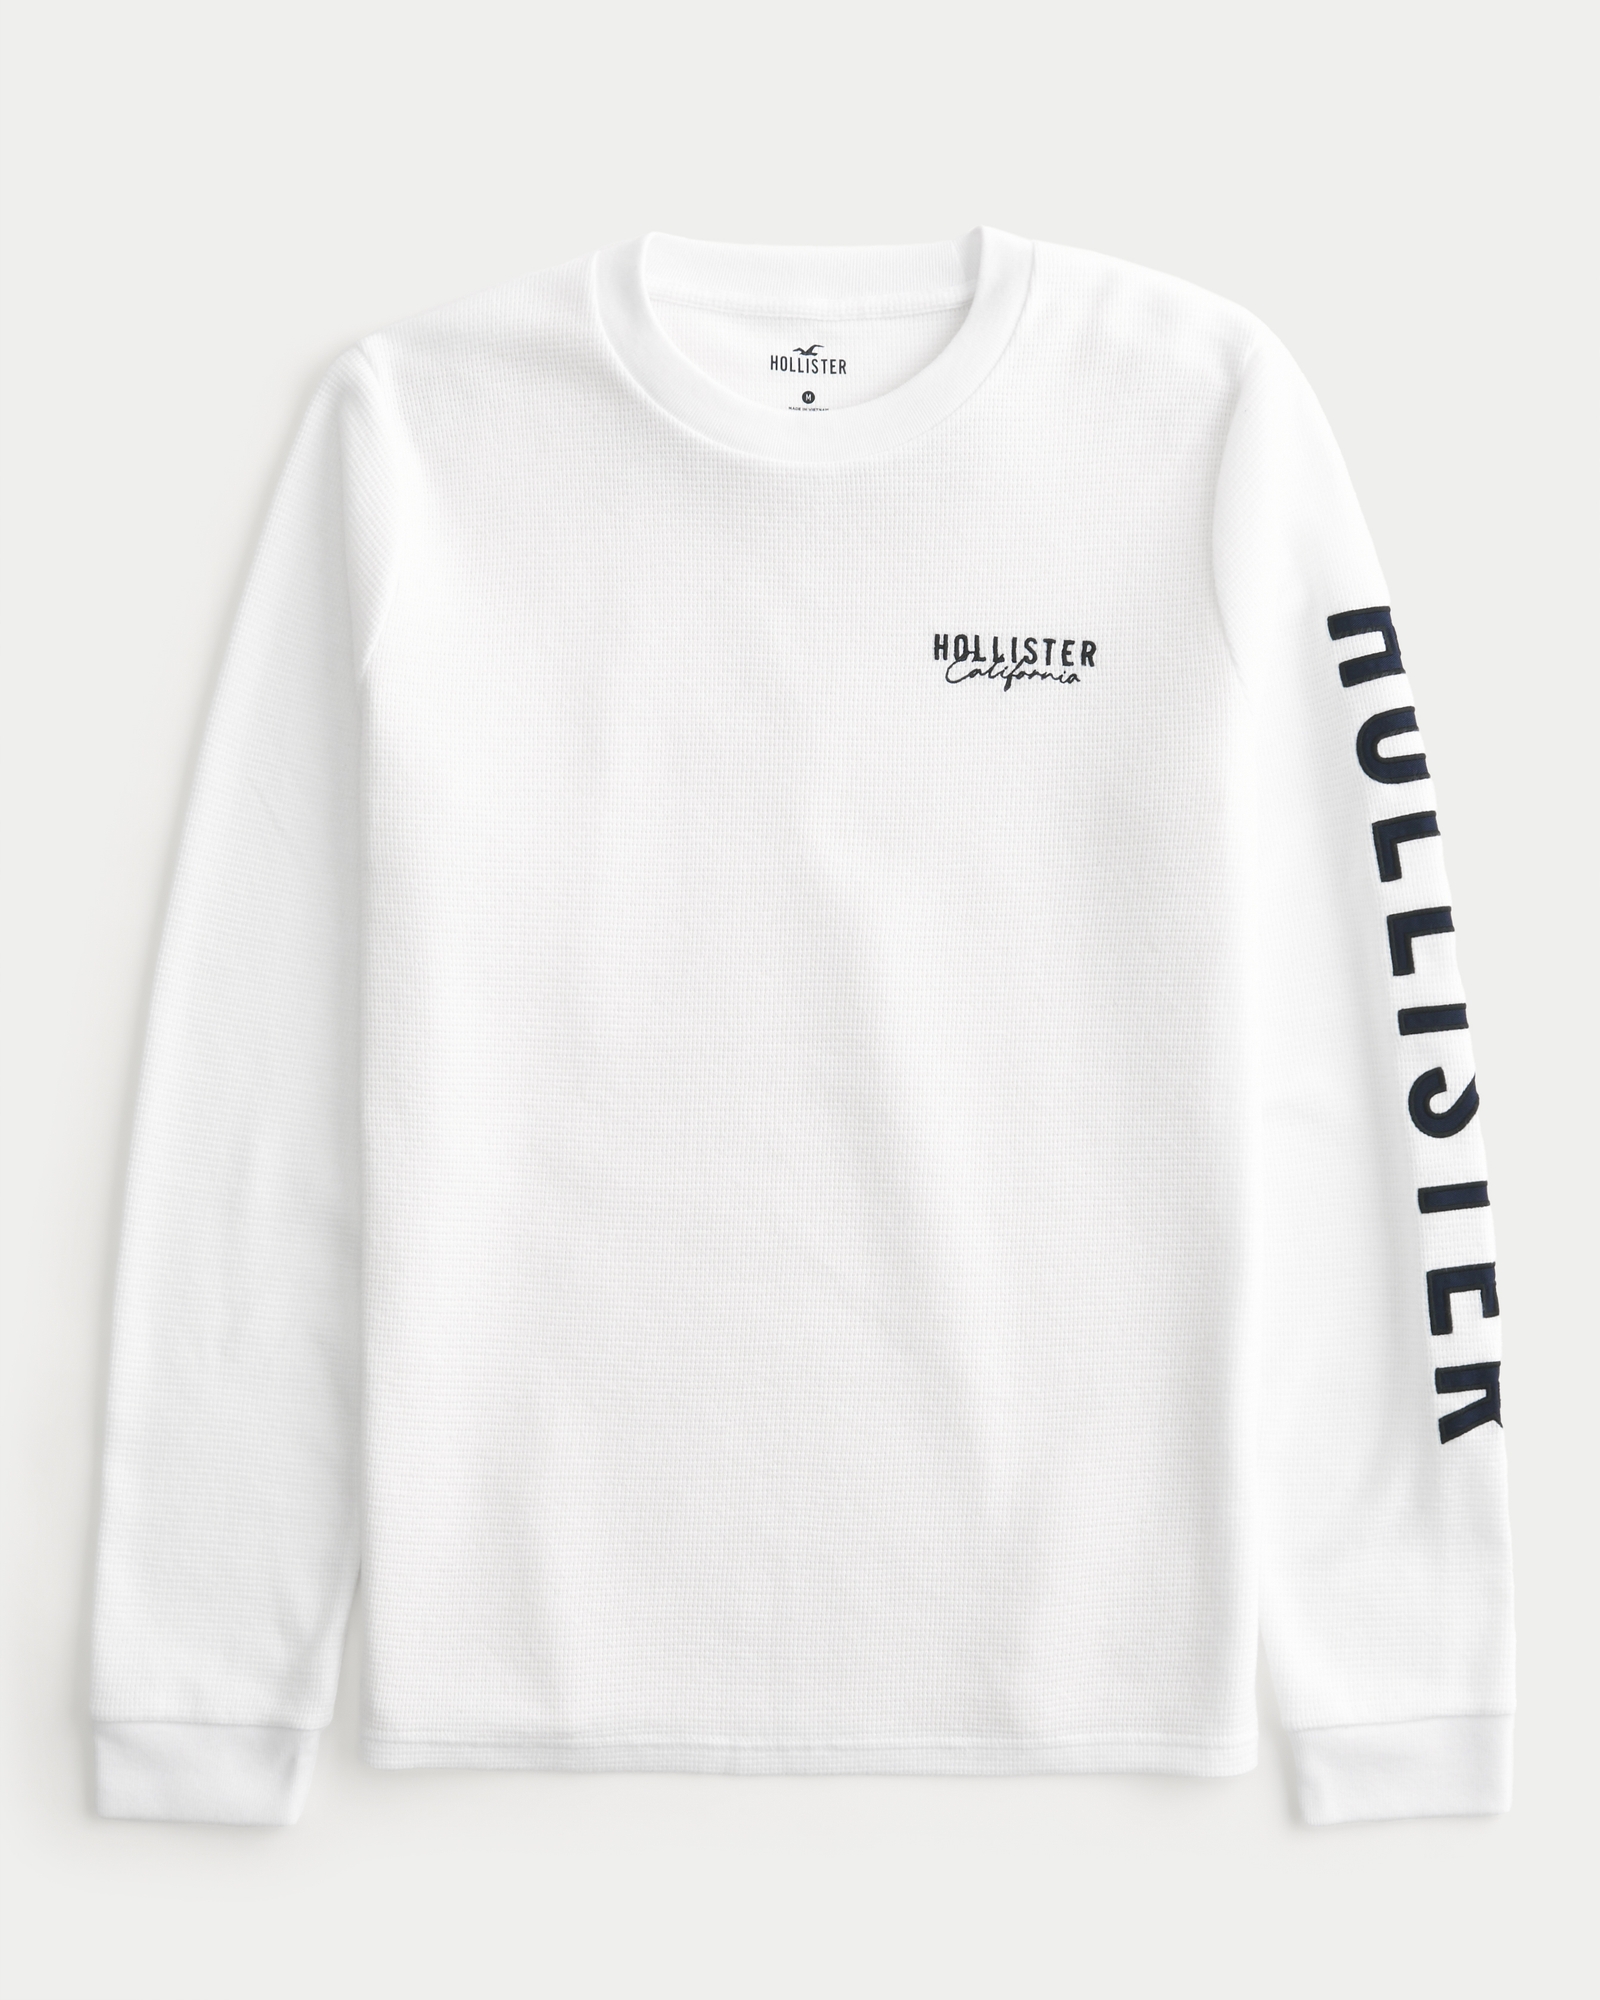 Buy Trending Cotton Printed Hollister California T-Shirt for Men and Women